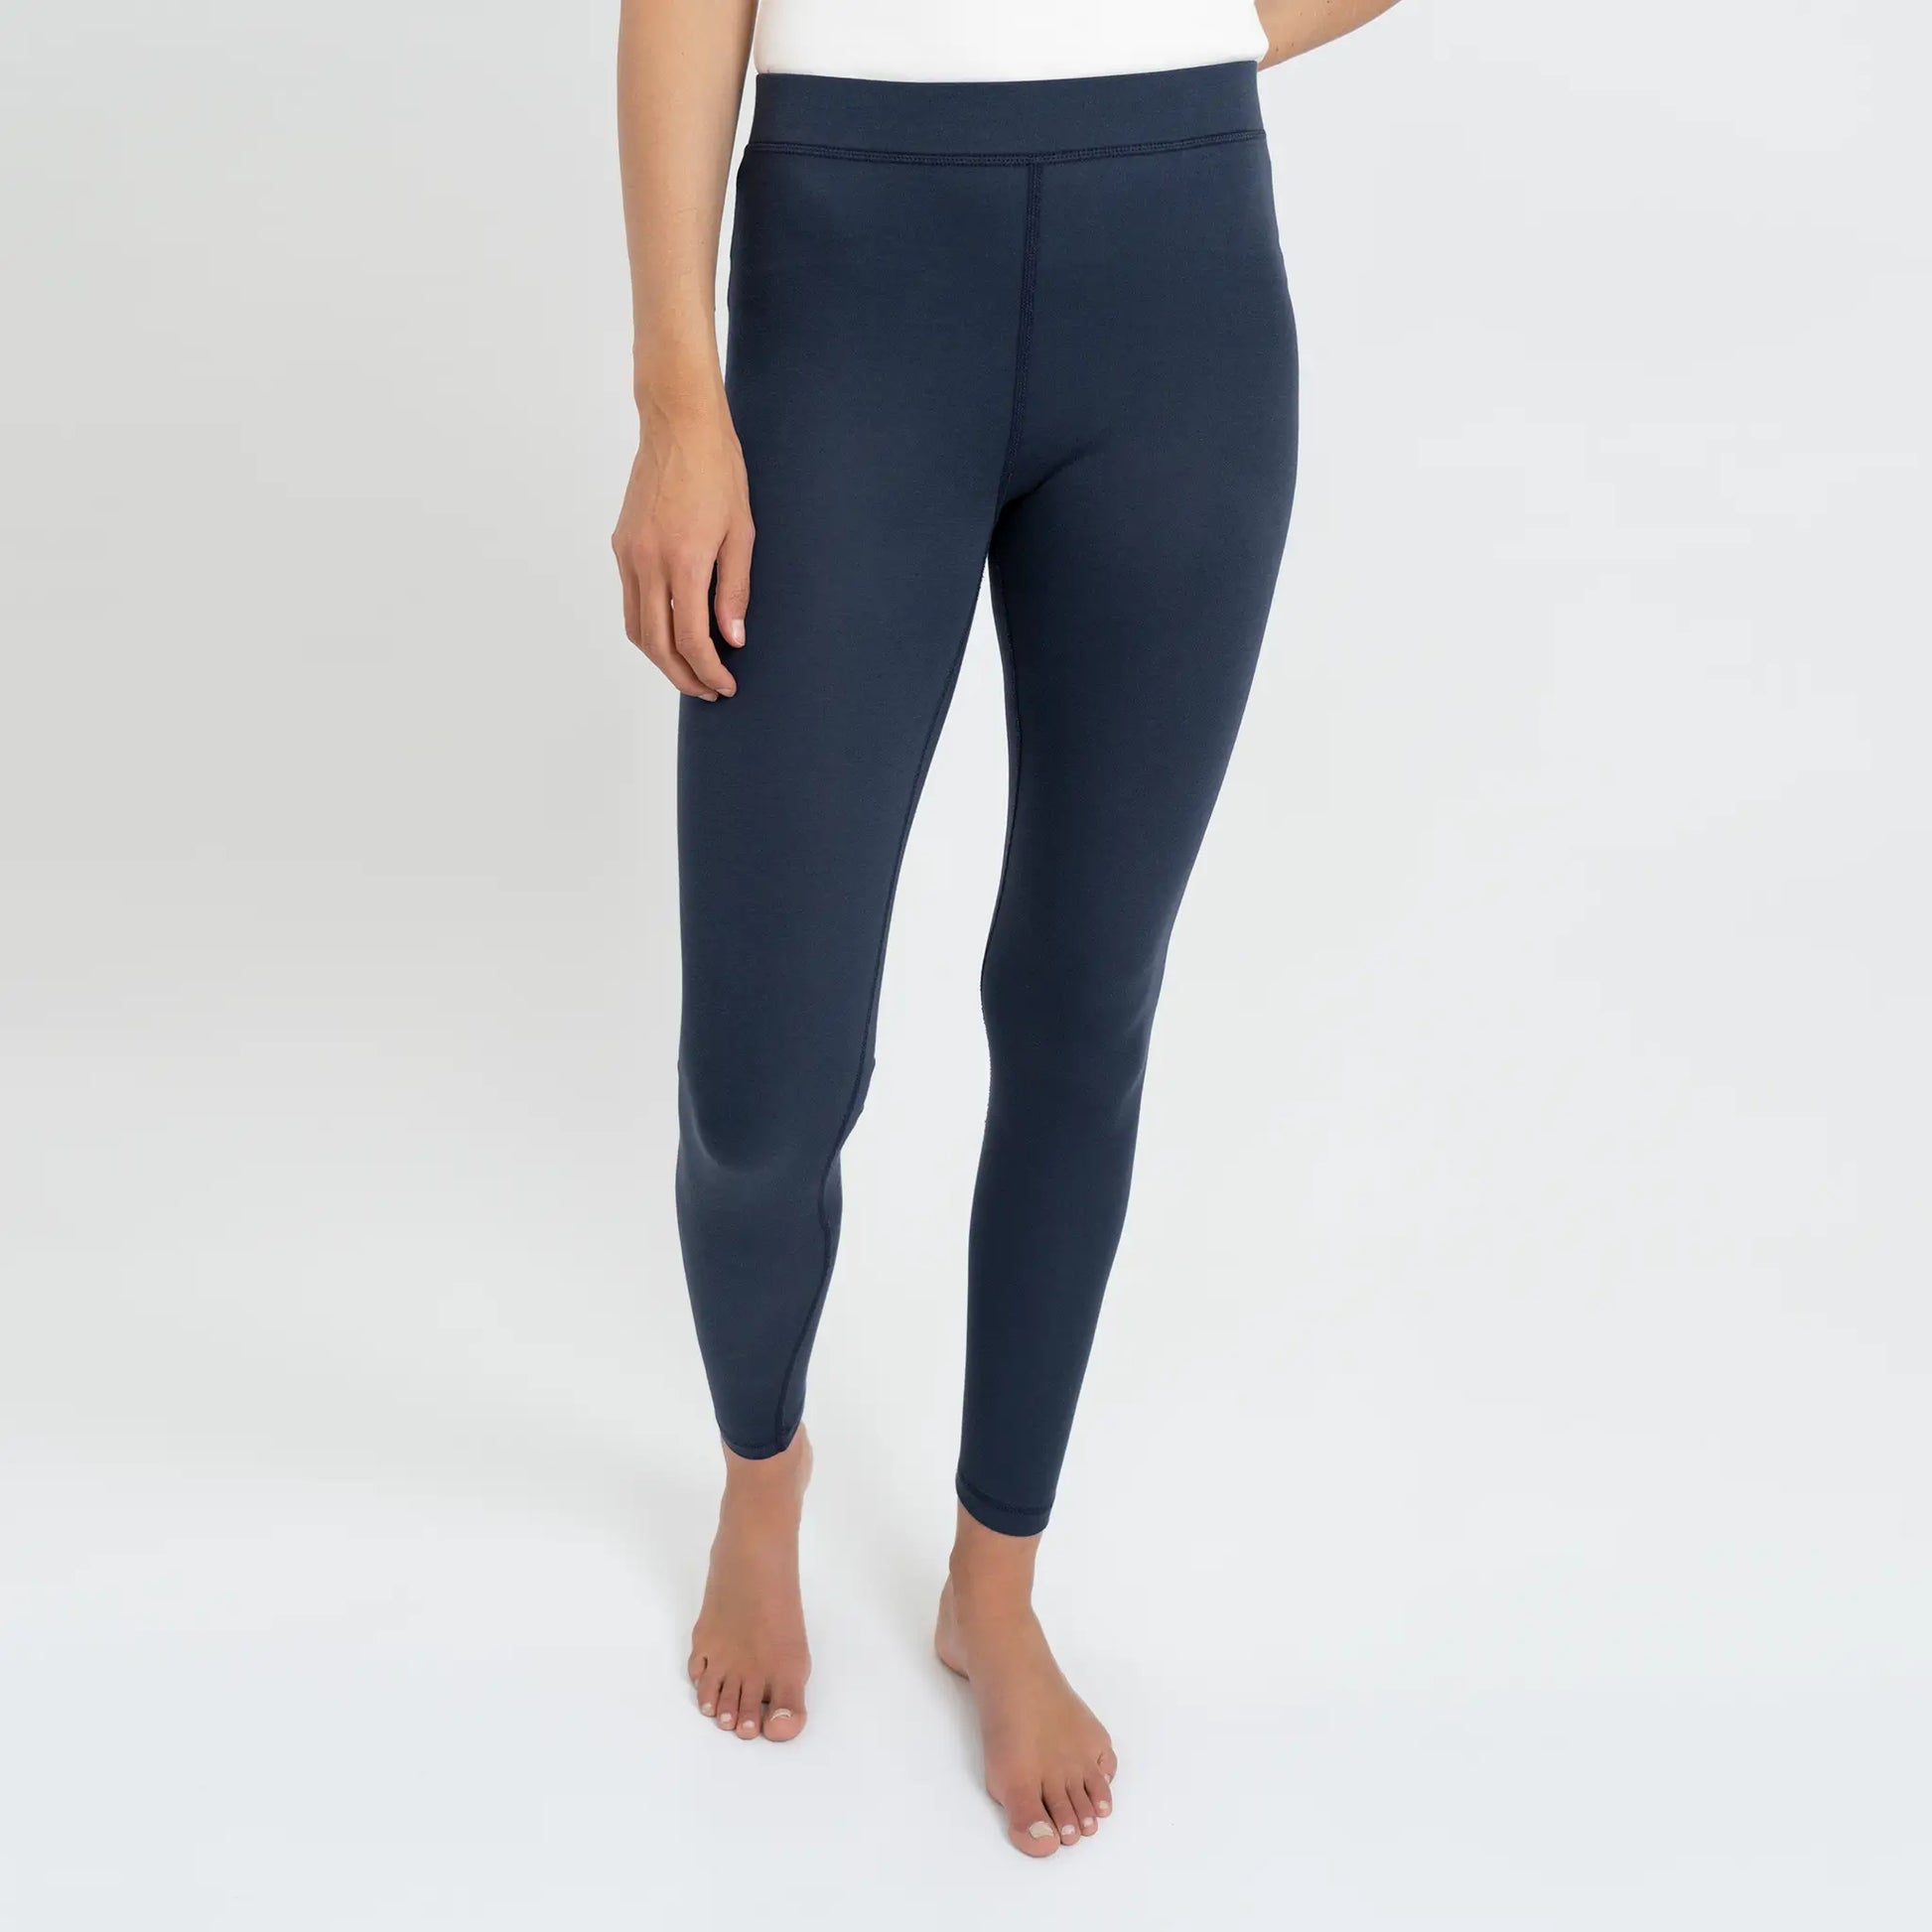 Organic cotton leggings for women - Aaavio - Medium